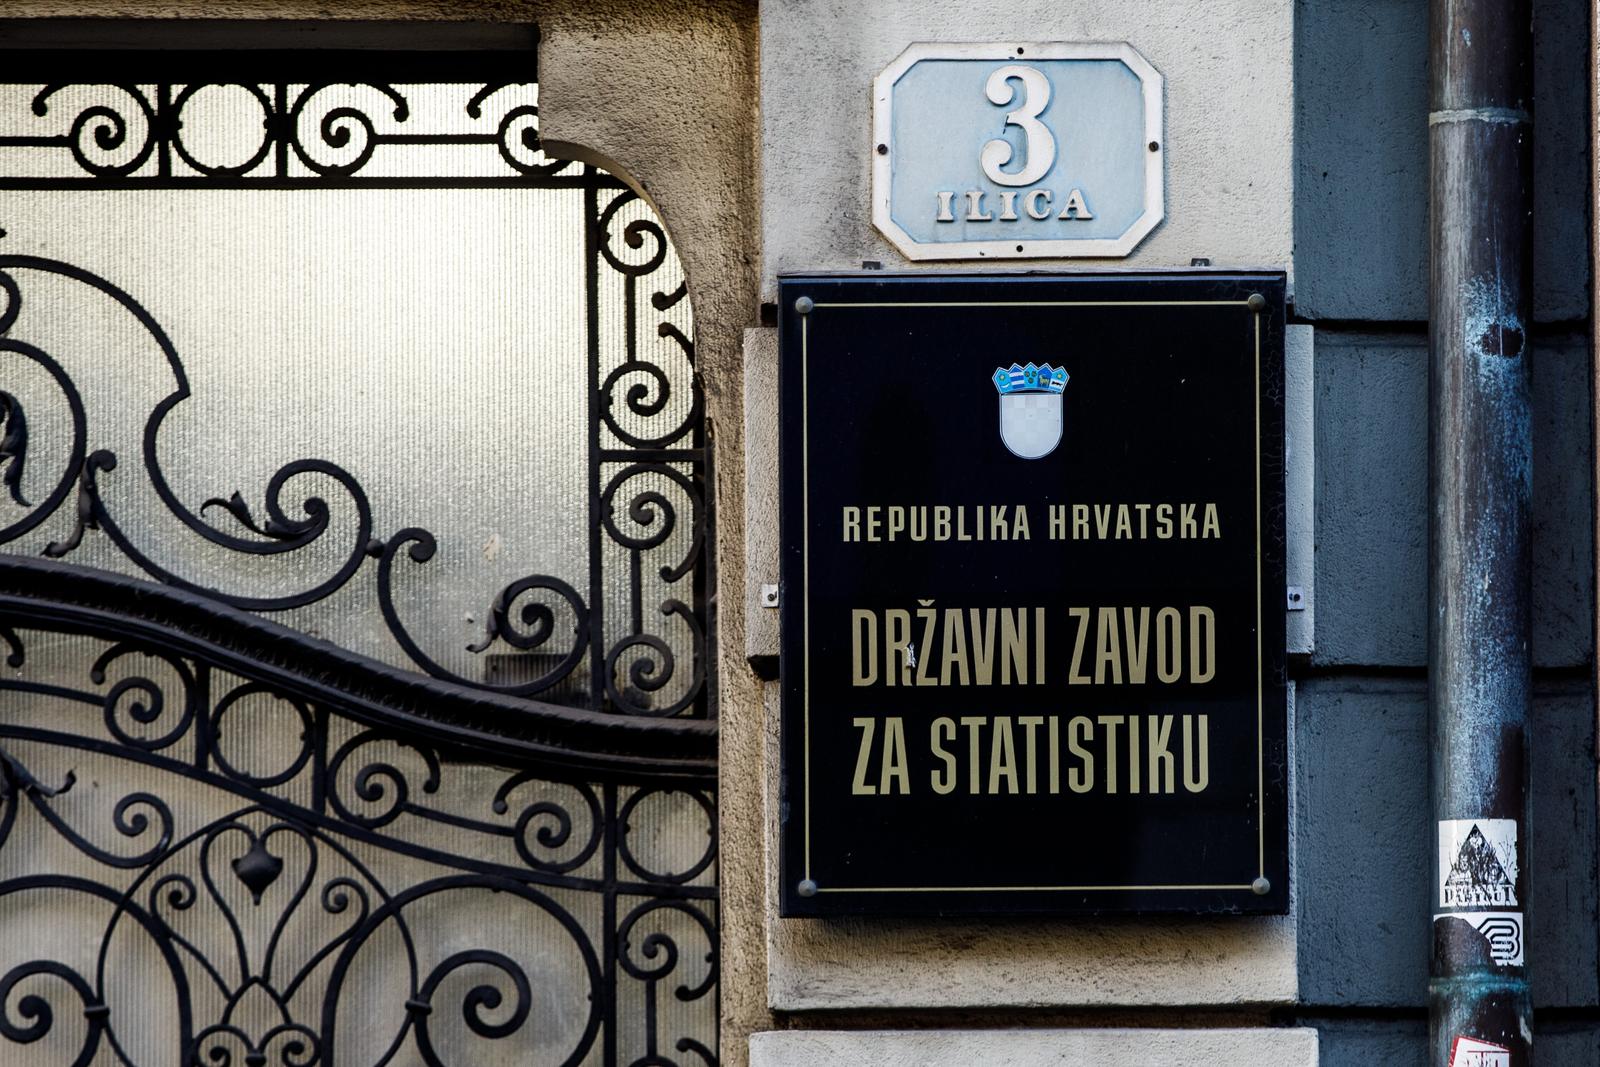 14.01.2022., Zagreb - Drzavni zavod za statistiku, Ilica 3. Photo: Davor Puklavec/PIXSELL